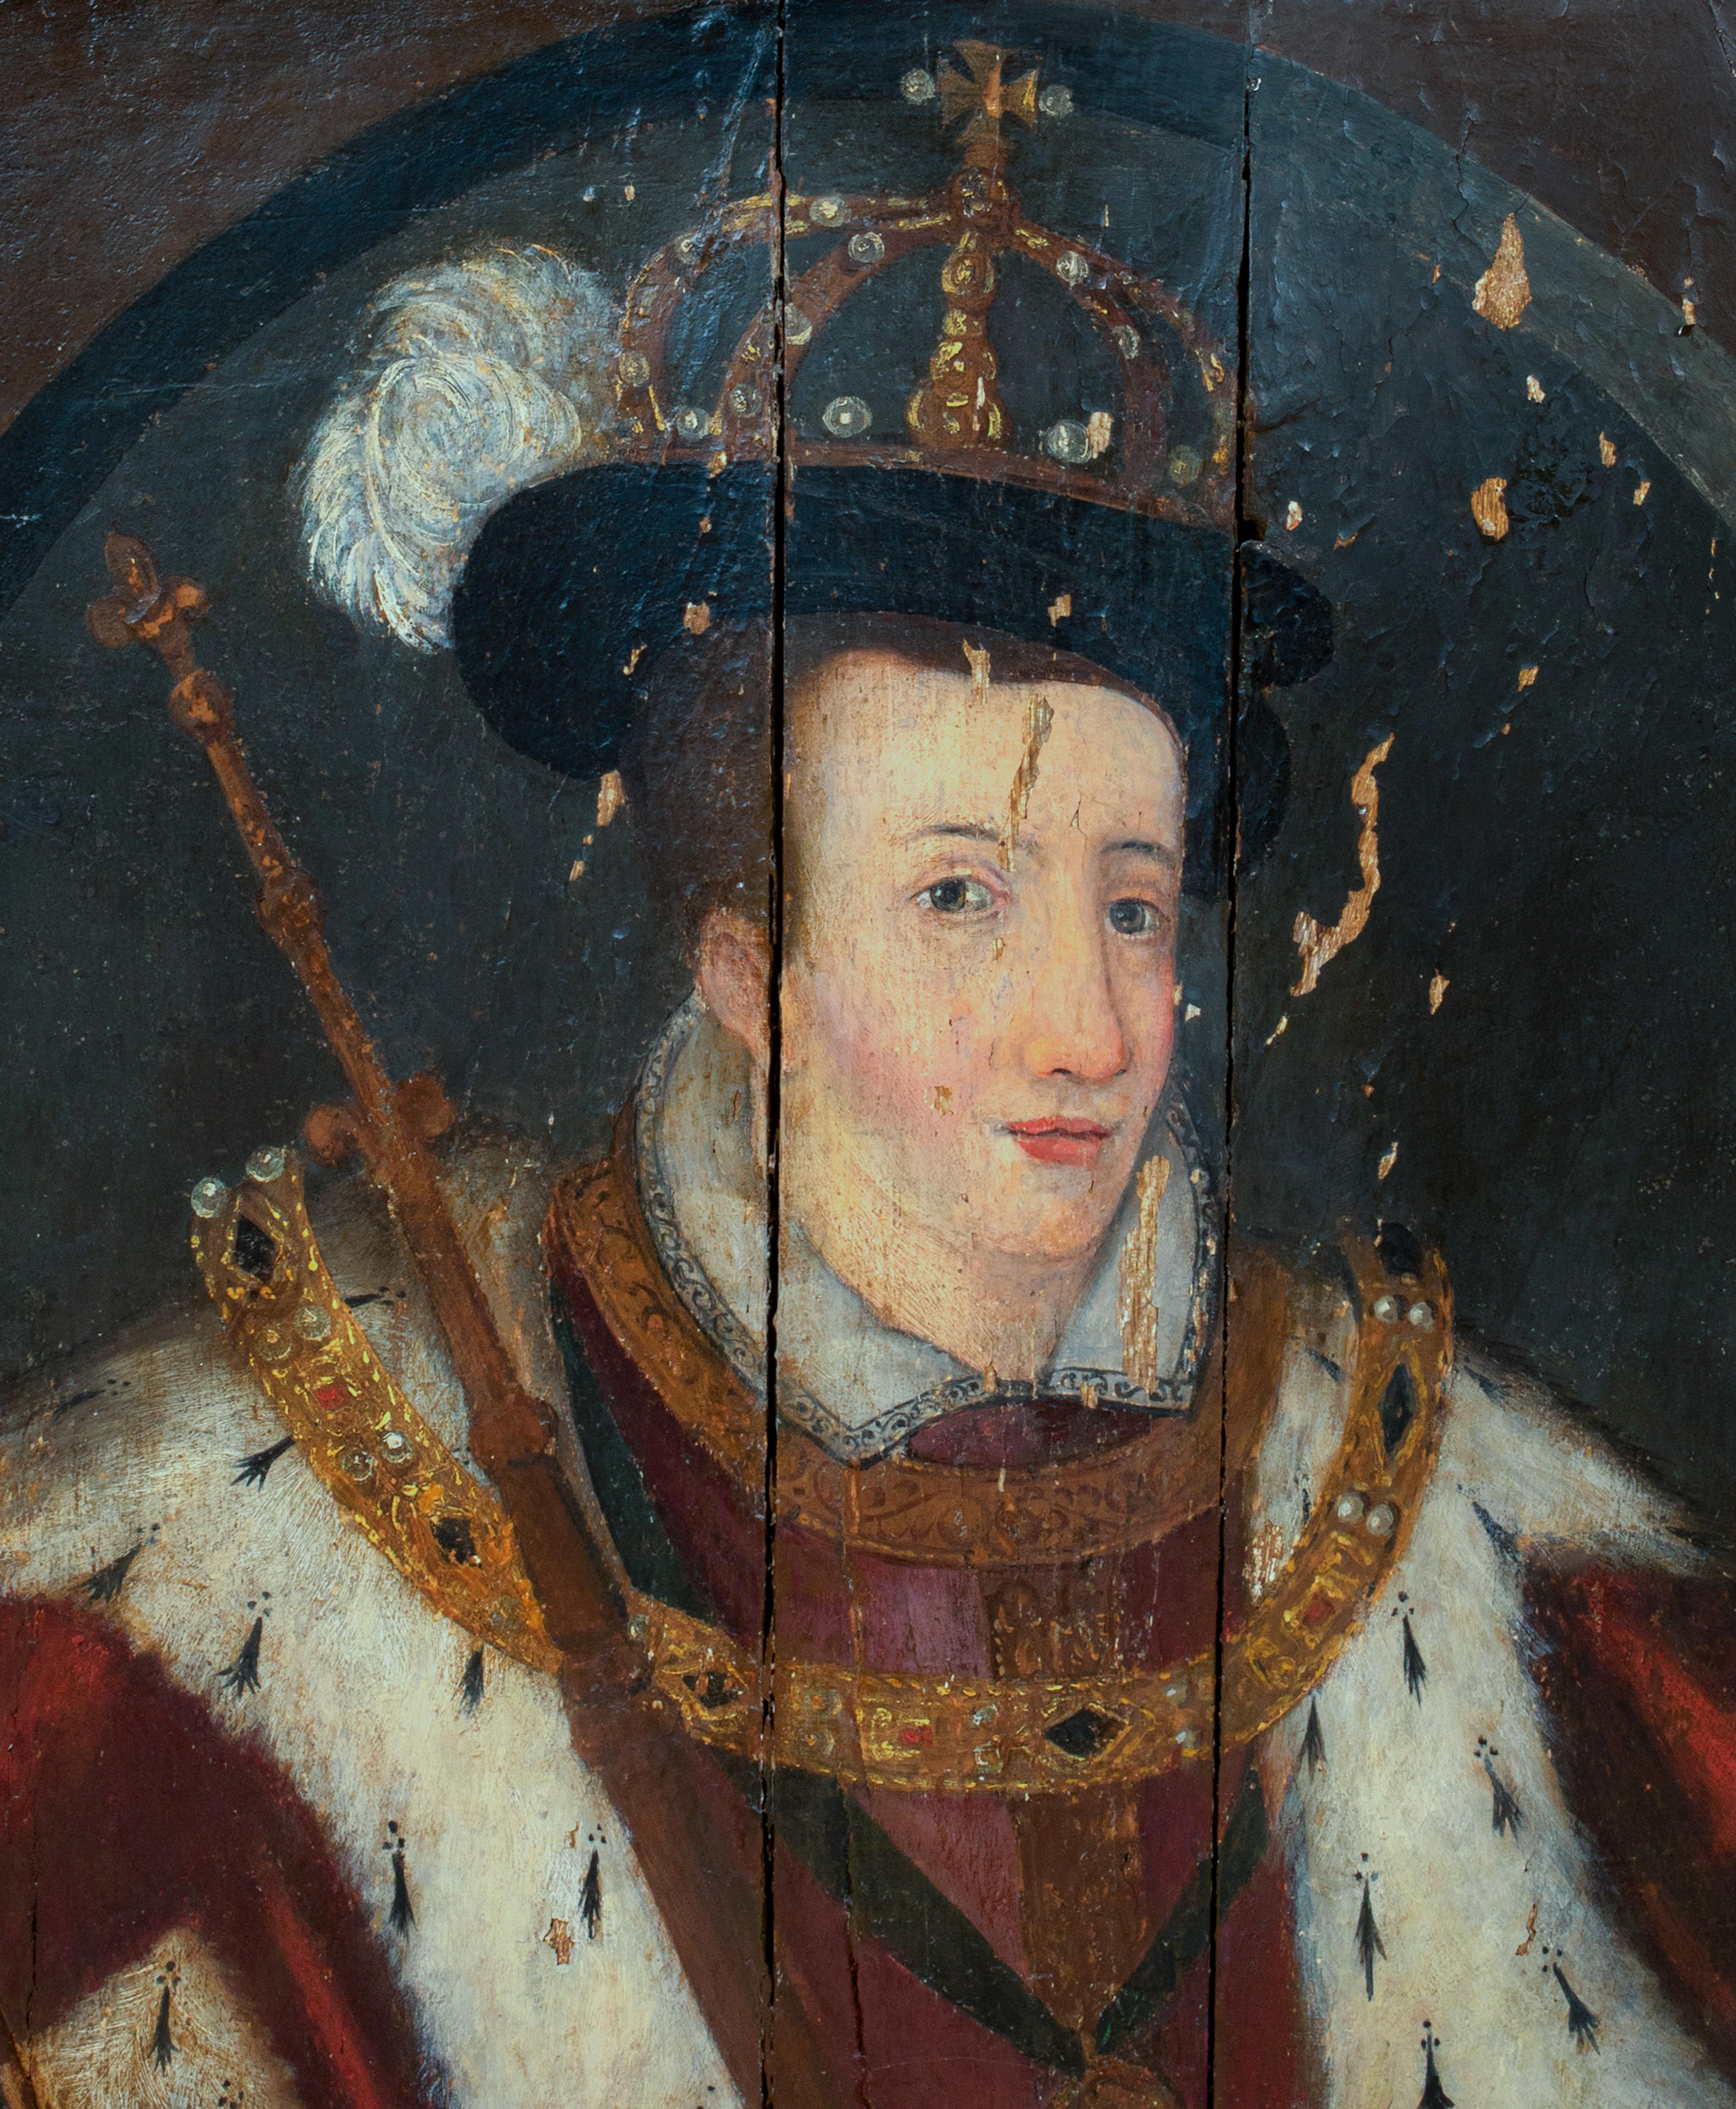 Coronation Portrait Of King Edward VI (1537-1553) as King Of England & Ireland For Sale 4